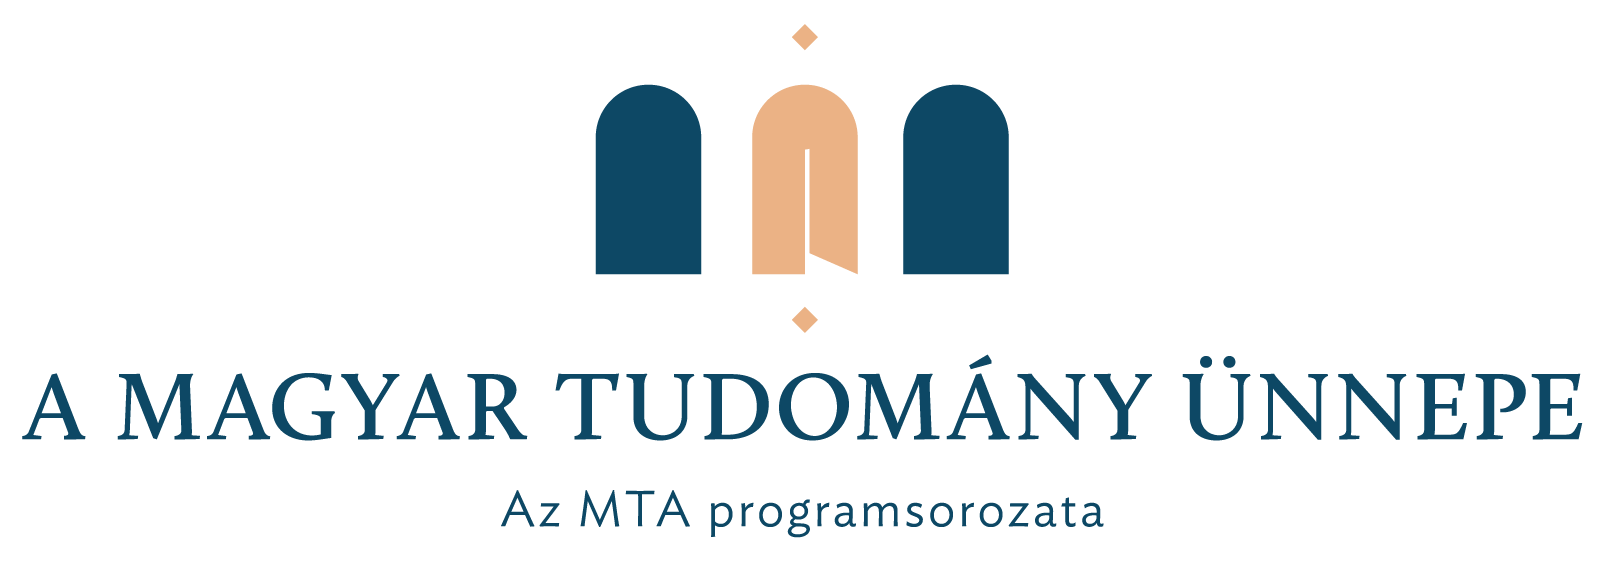 MTU-logo-HU